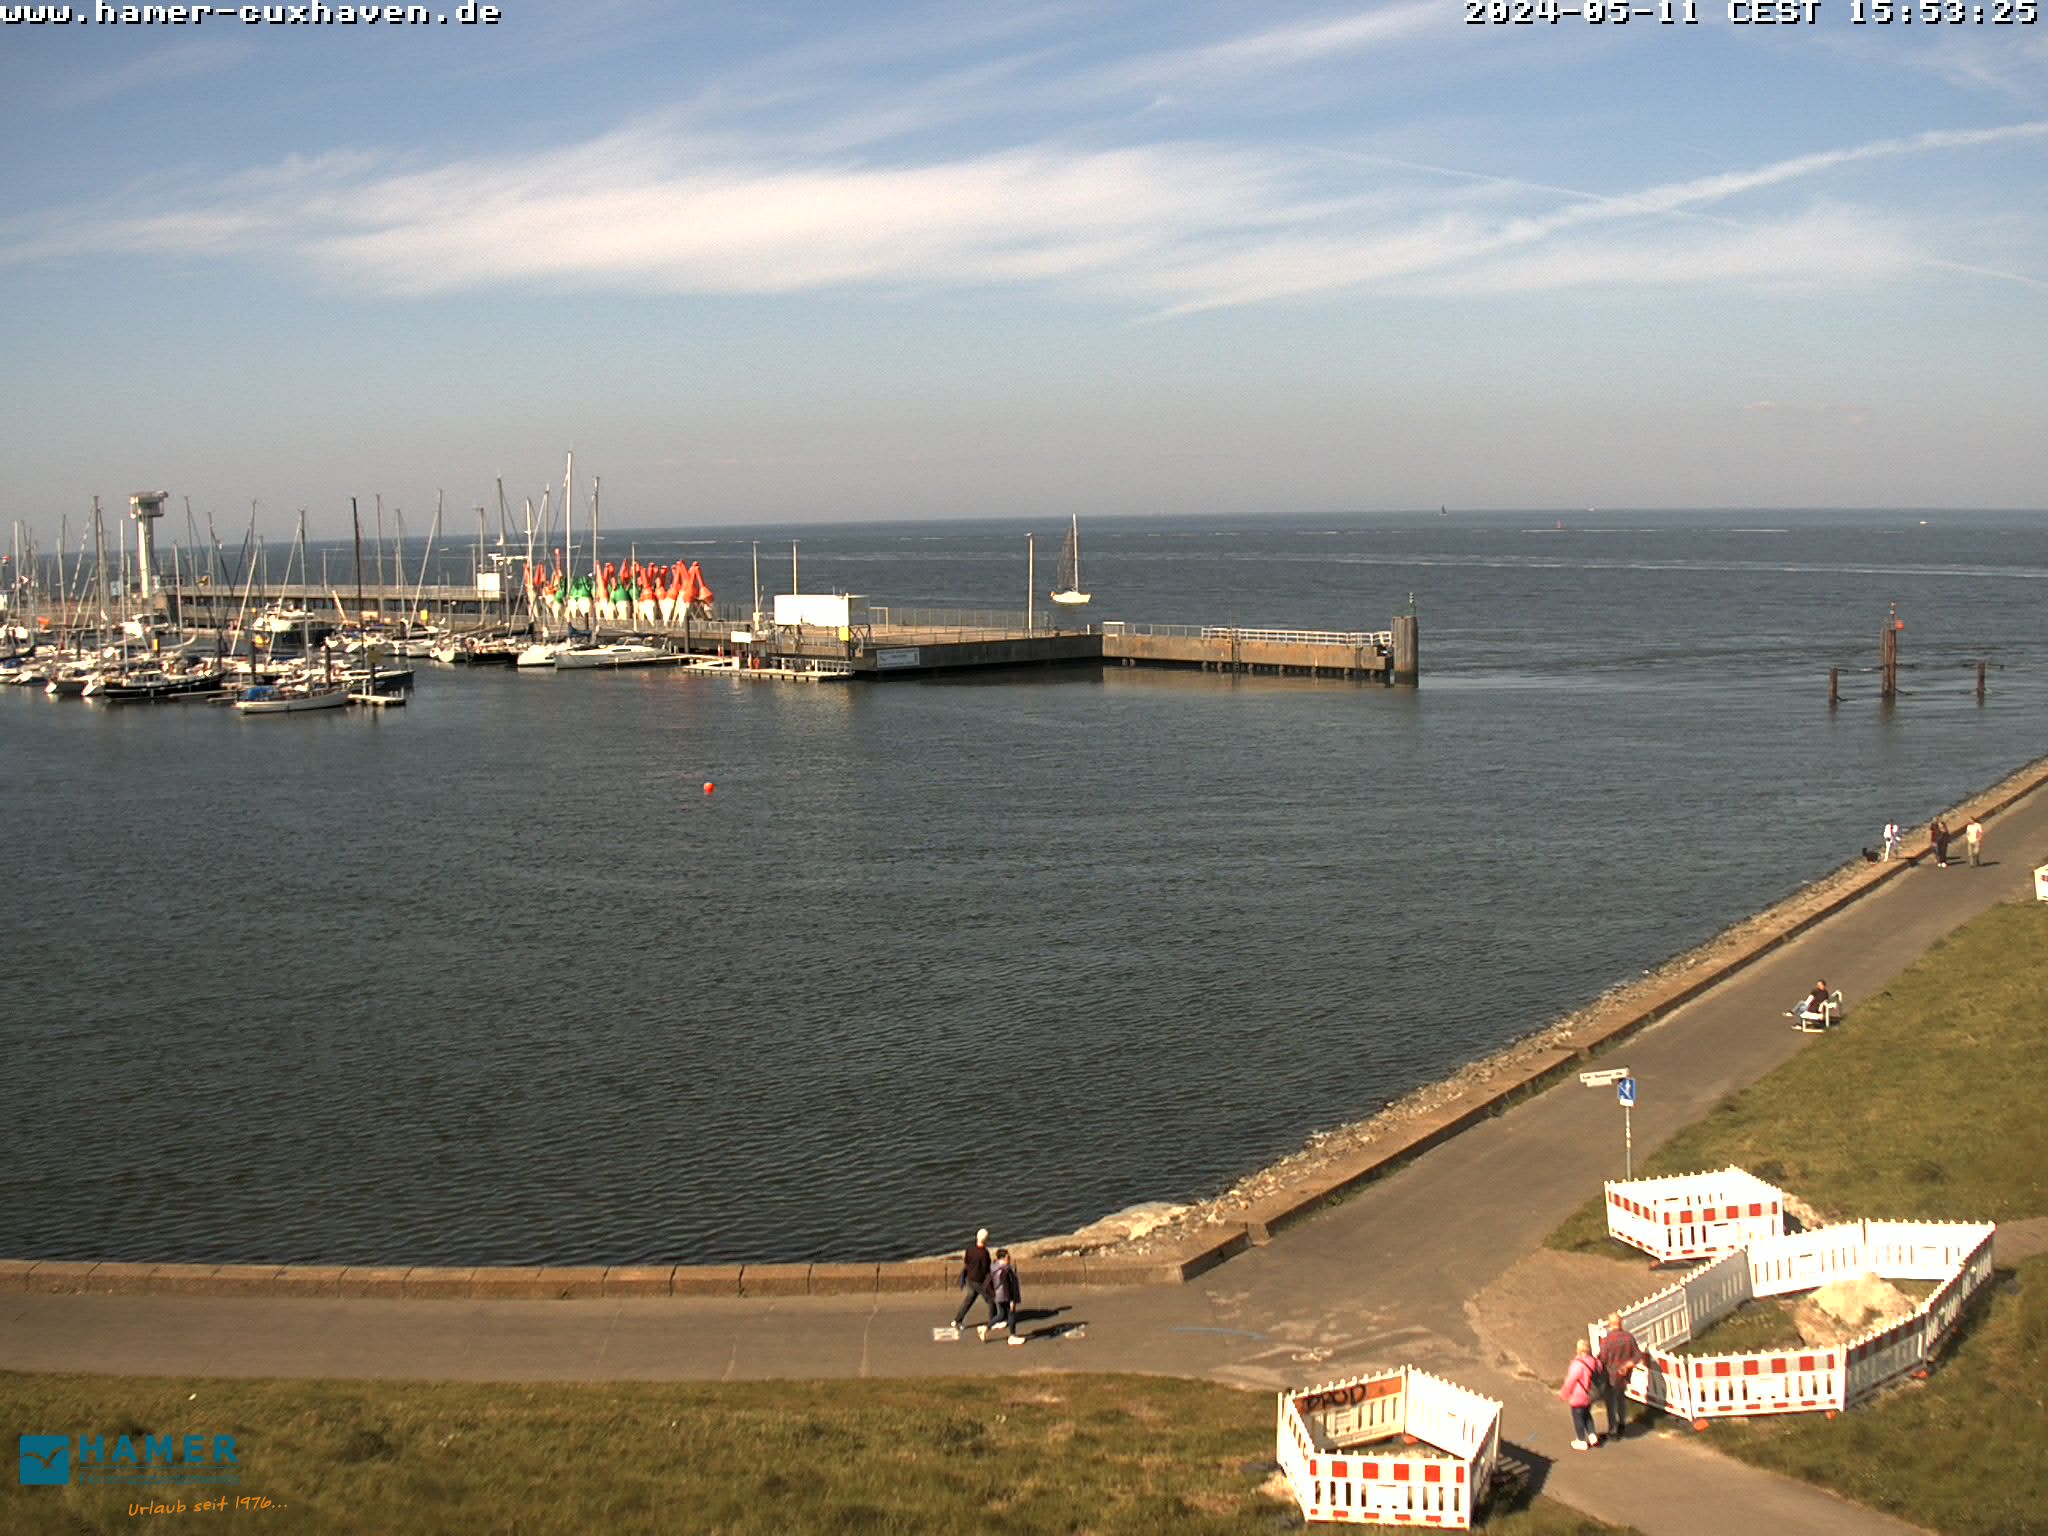 Cuxhaven Mer. 15:55